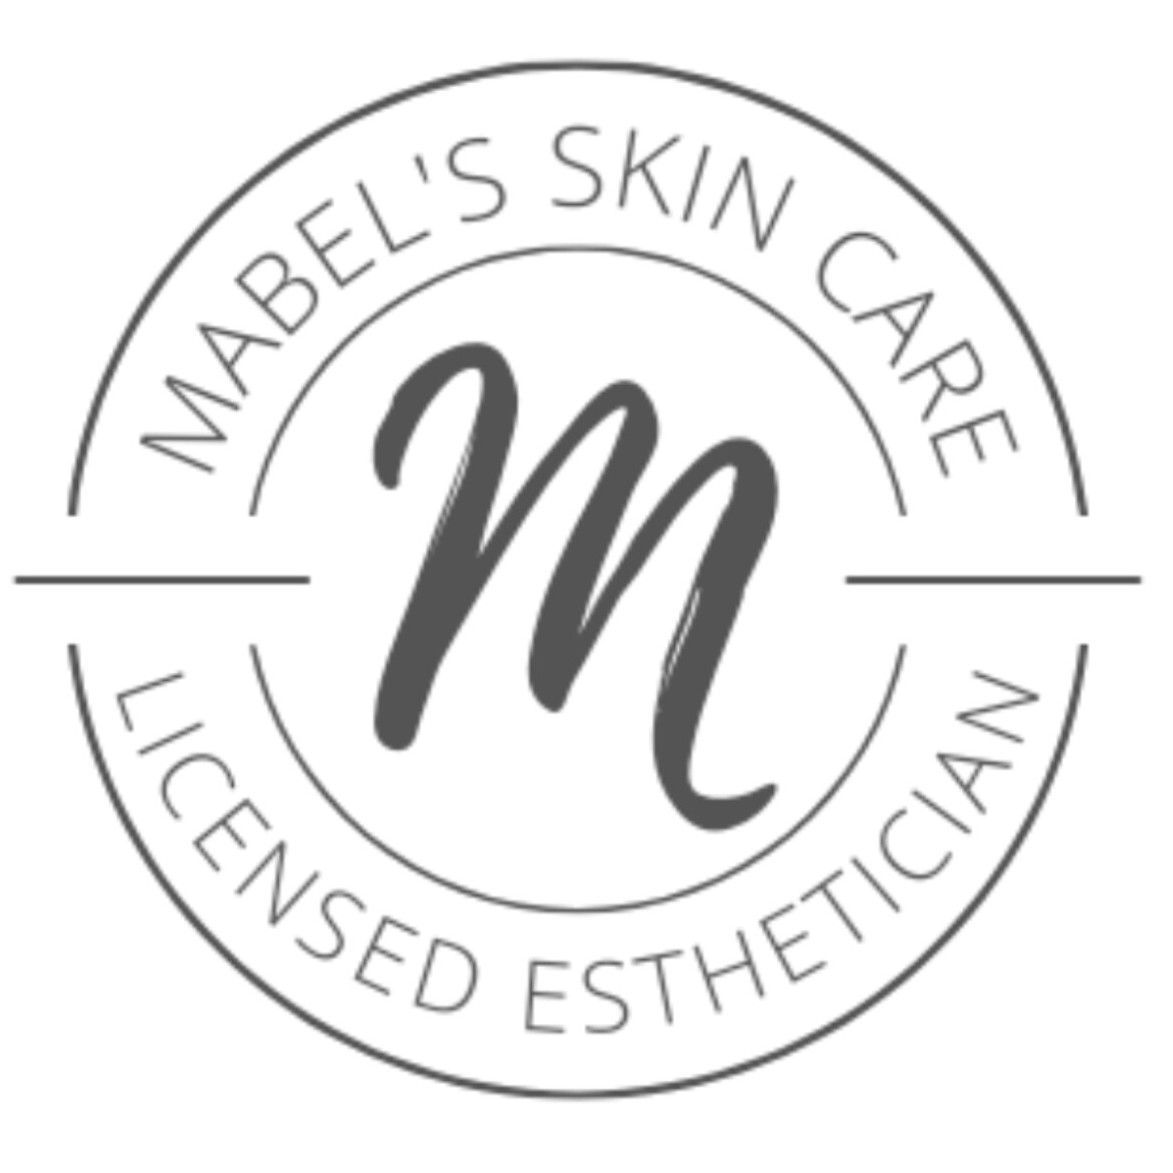 Mabel's Skin Care, 430 Peninsula Ave, Suite 3, San Mateo, 94401